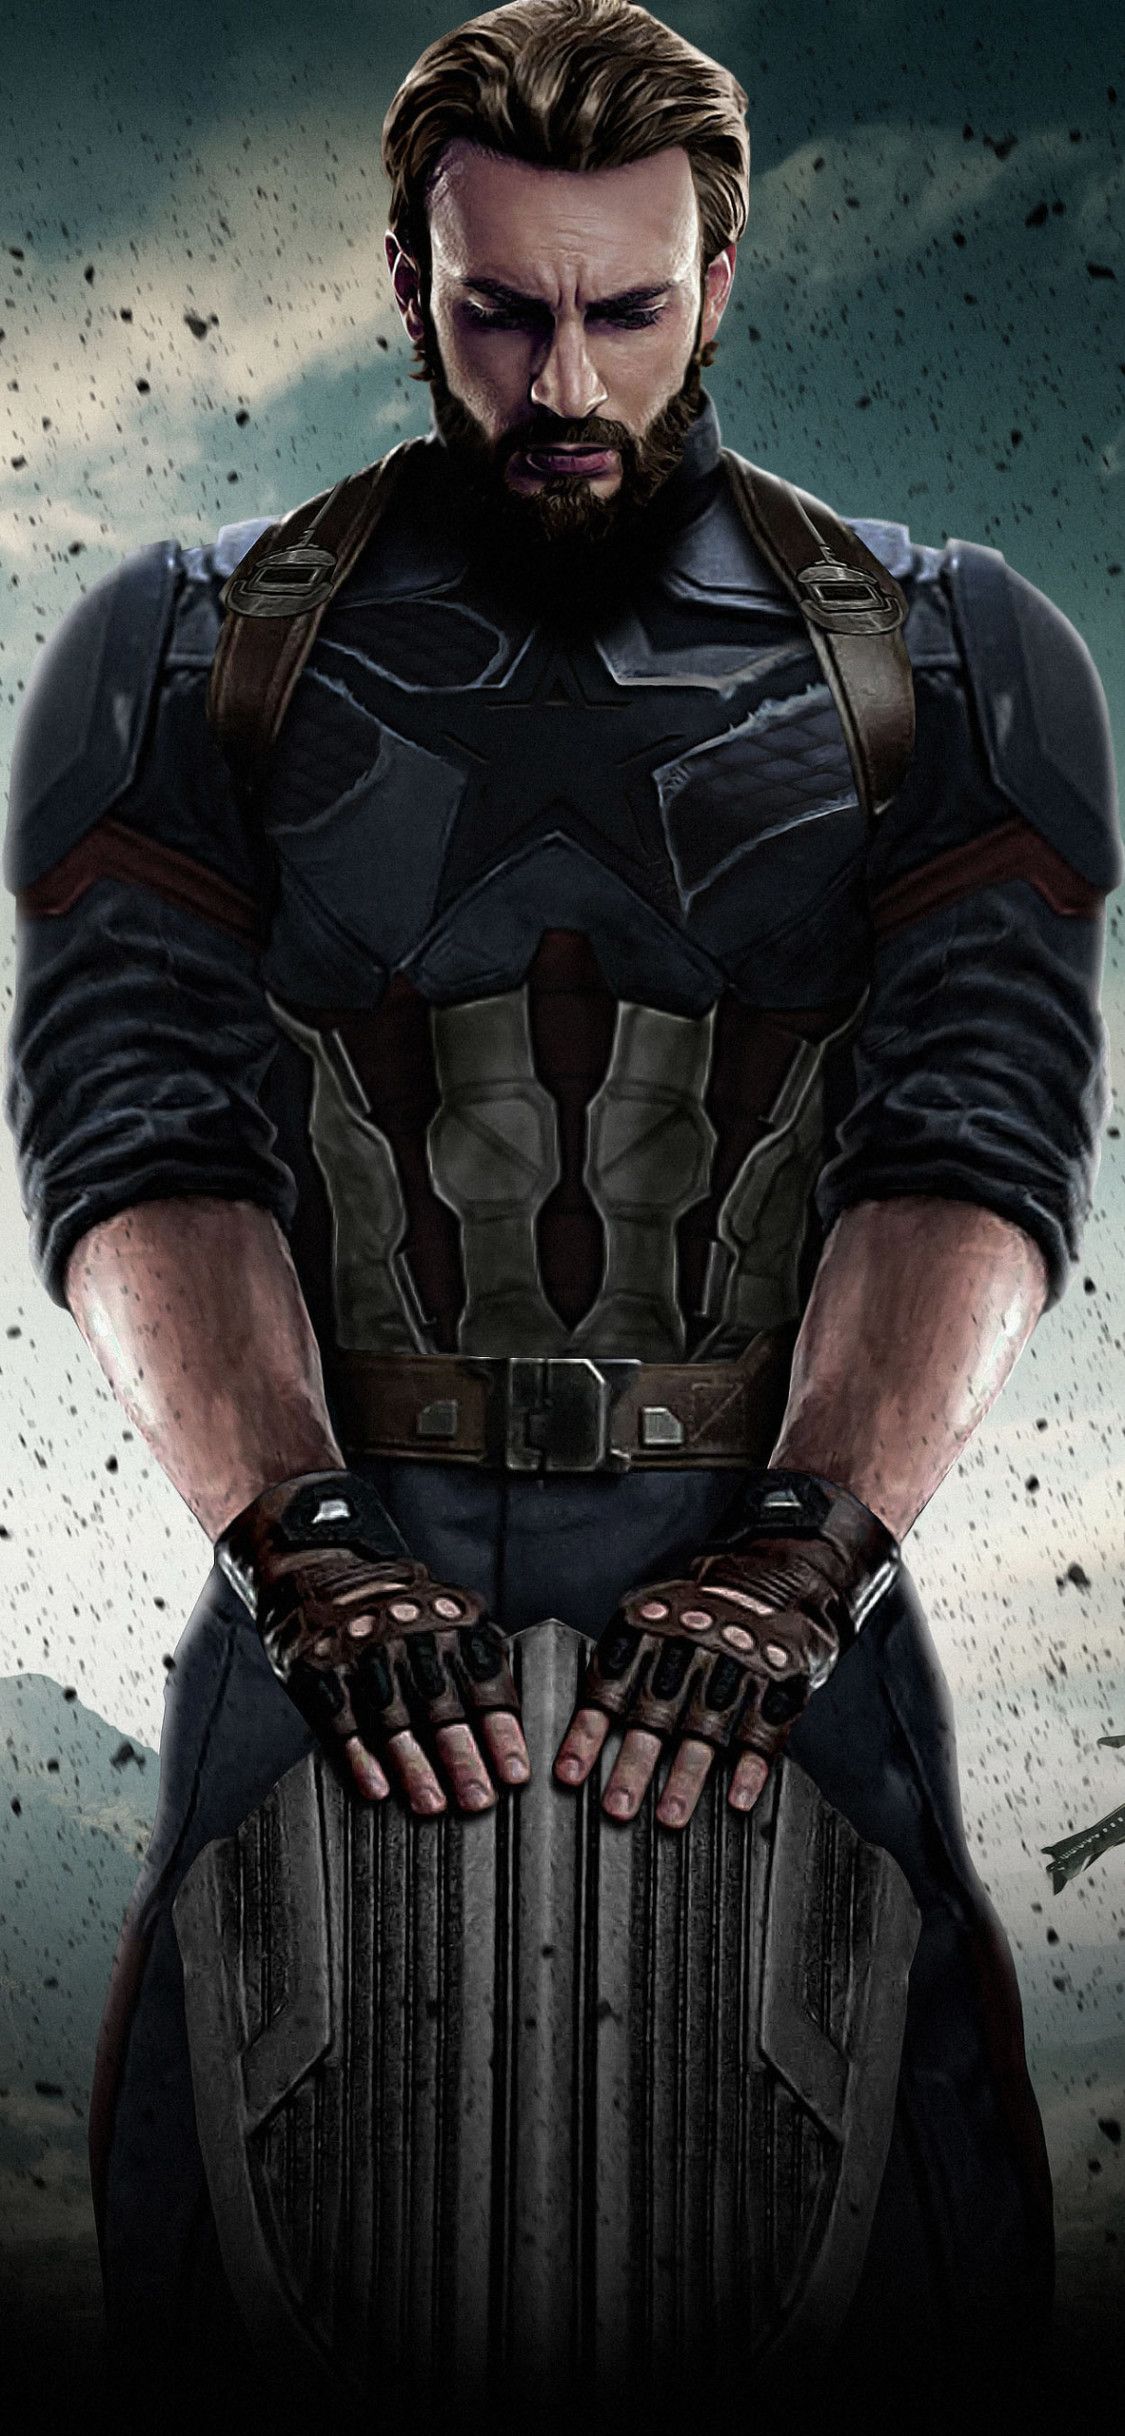 Captain America Avengers Infinity War 2018 iPhone XS